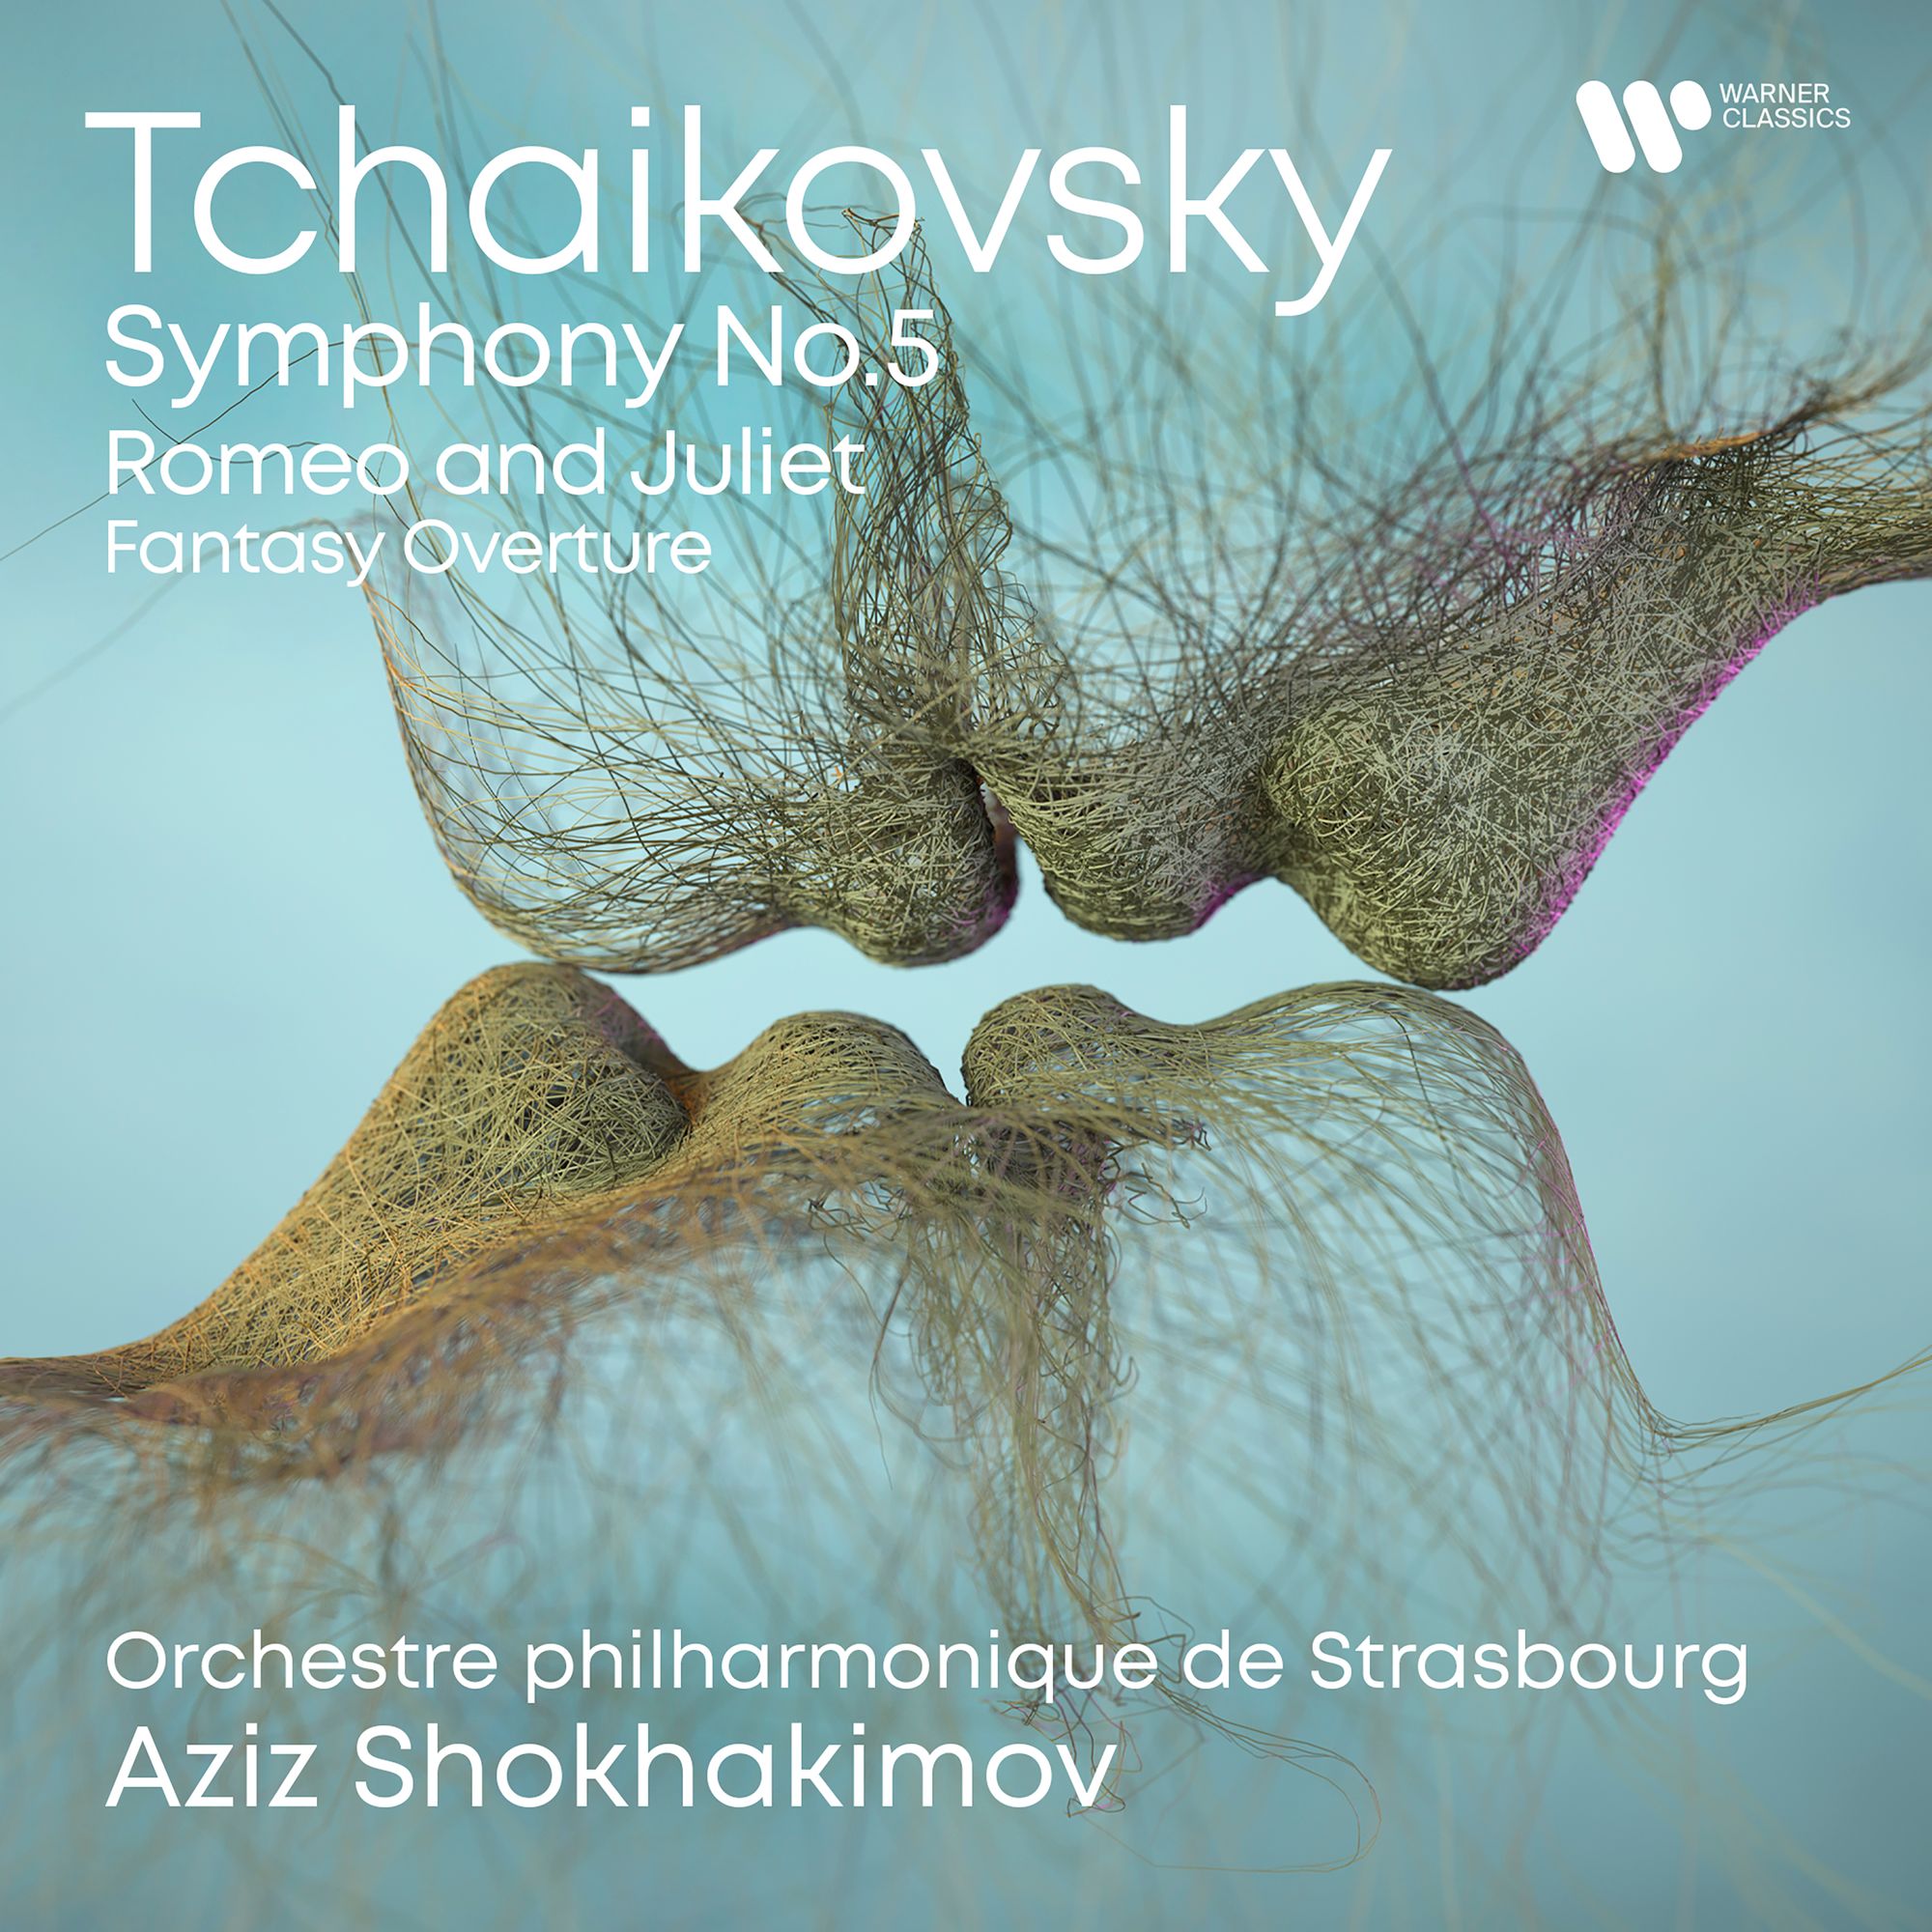 Tchaikovsky 5 (x2!): Shokhakimov and Honeck